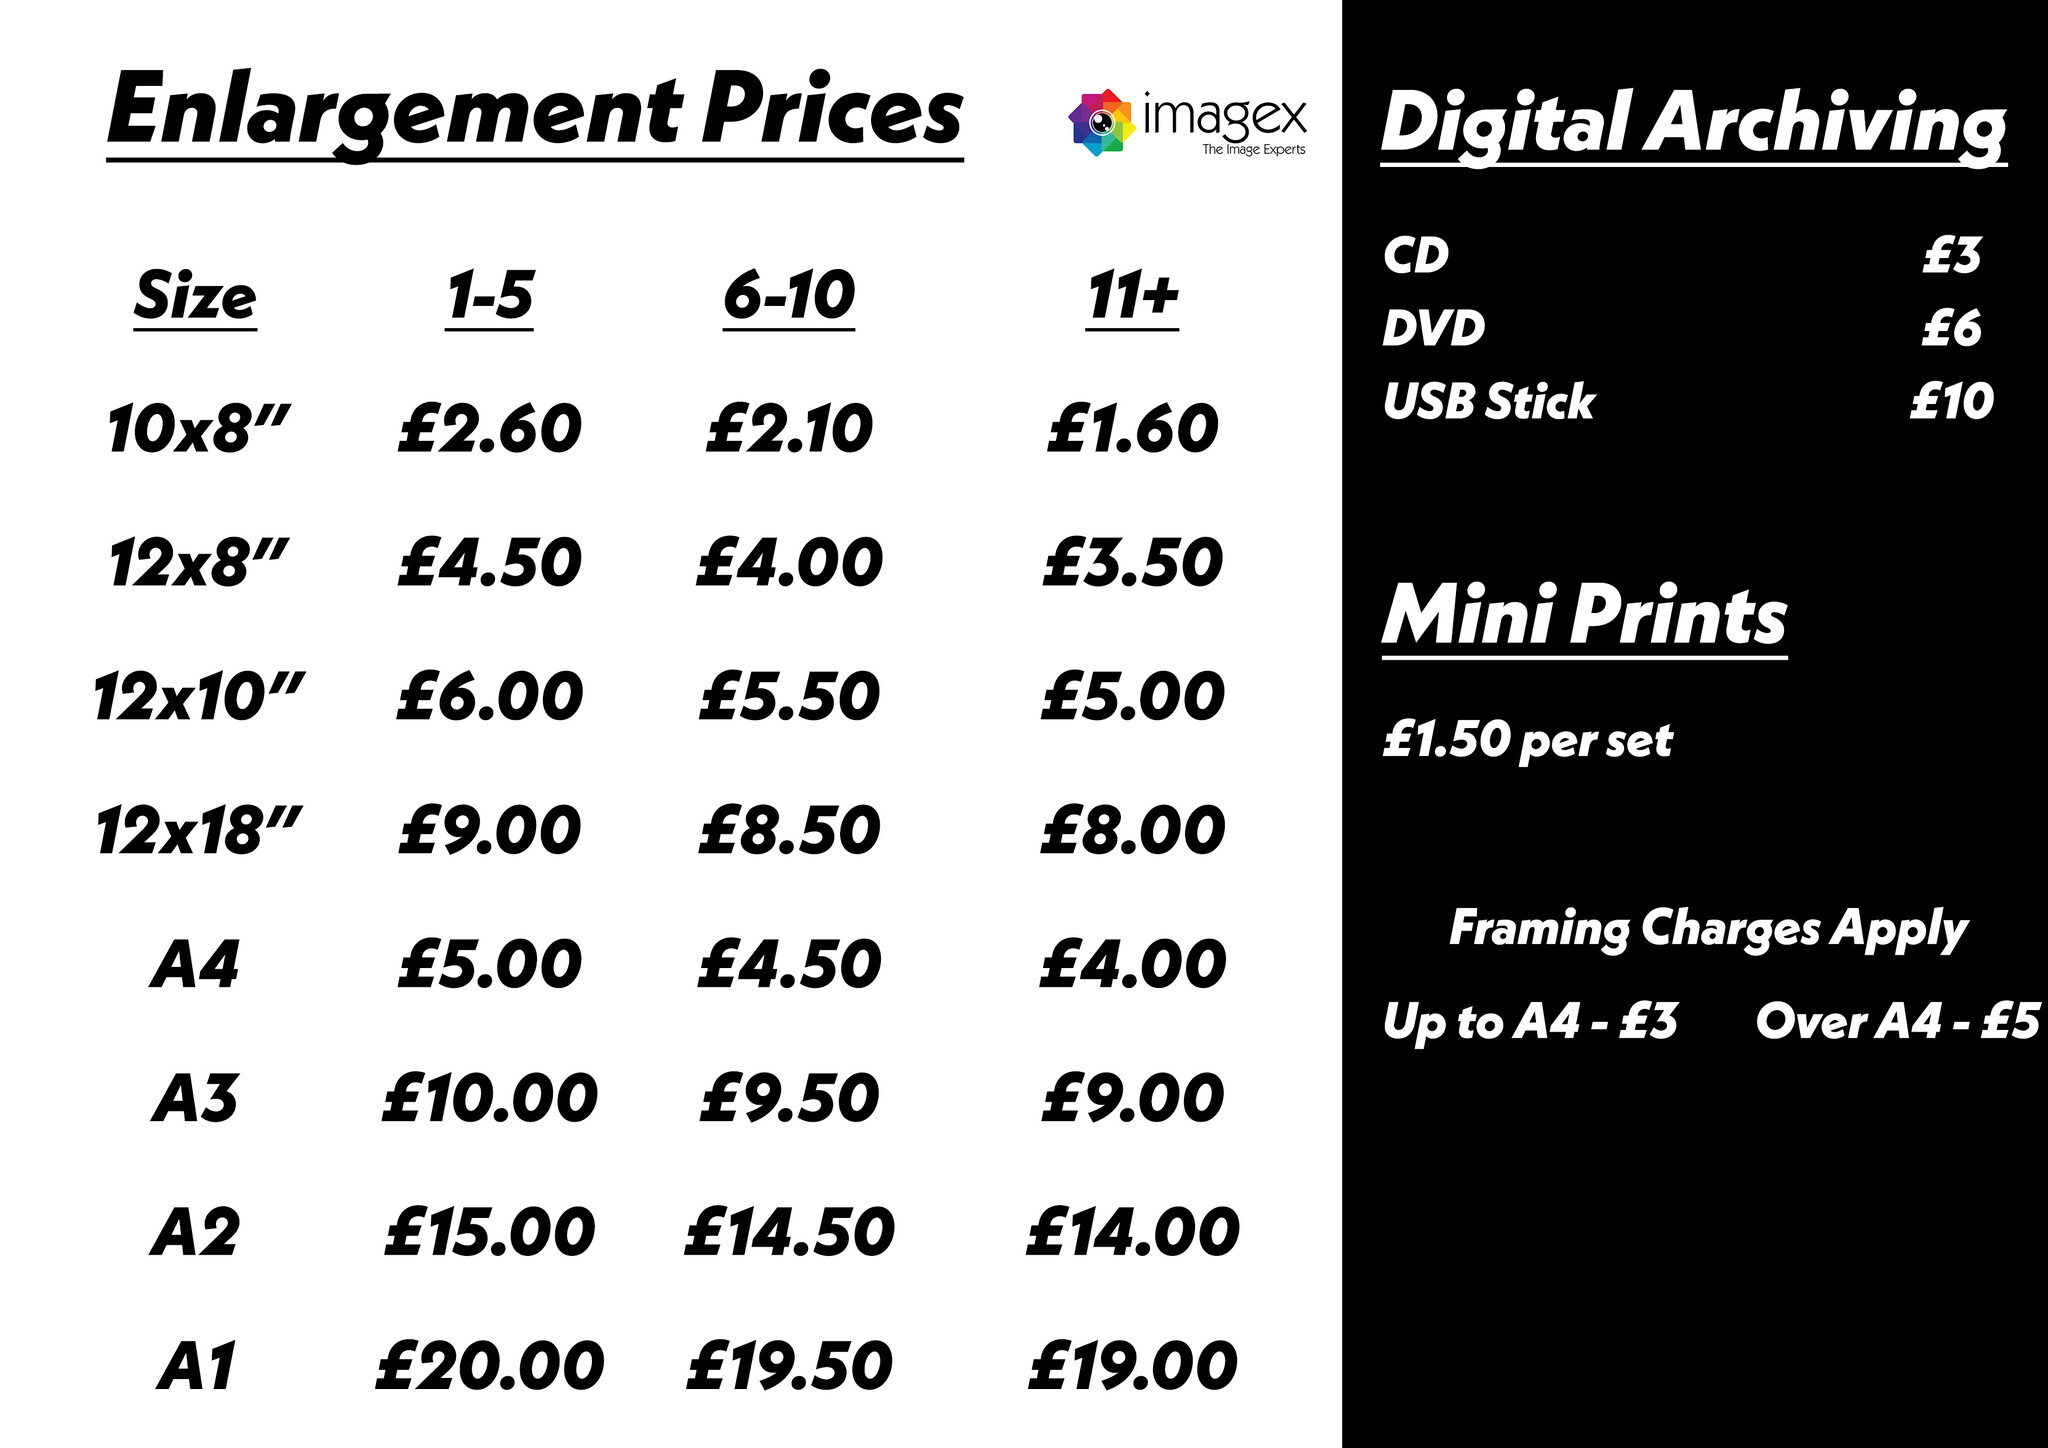 Enlargement Prices